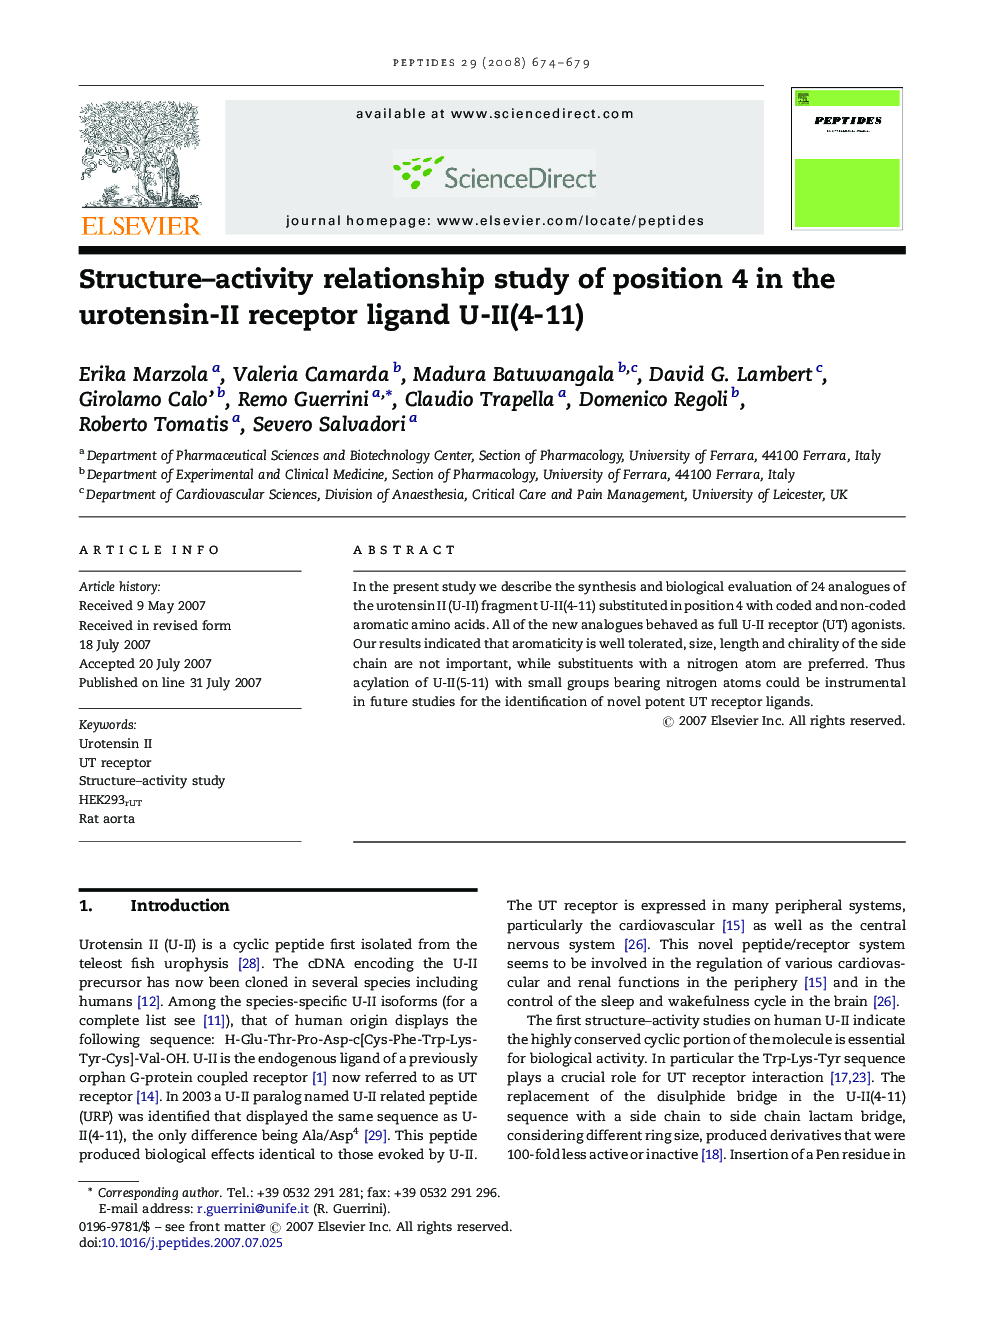 Structure-activity relationship study of position 4 in the urotensin-II receptor ligand U-II(4-11)